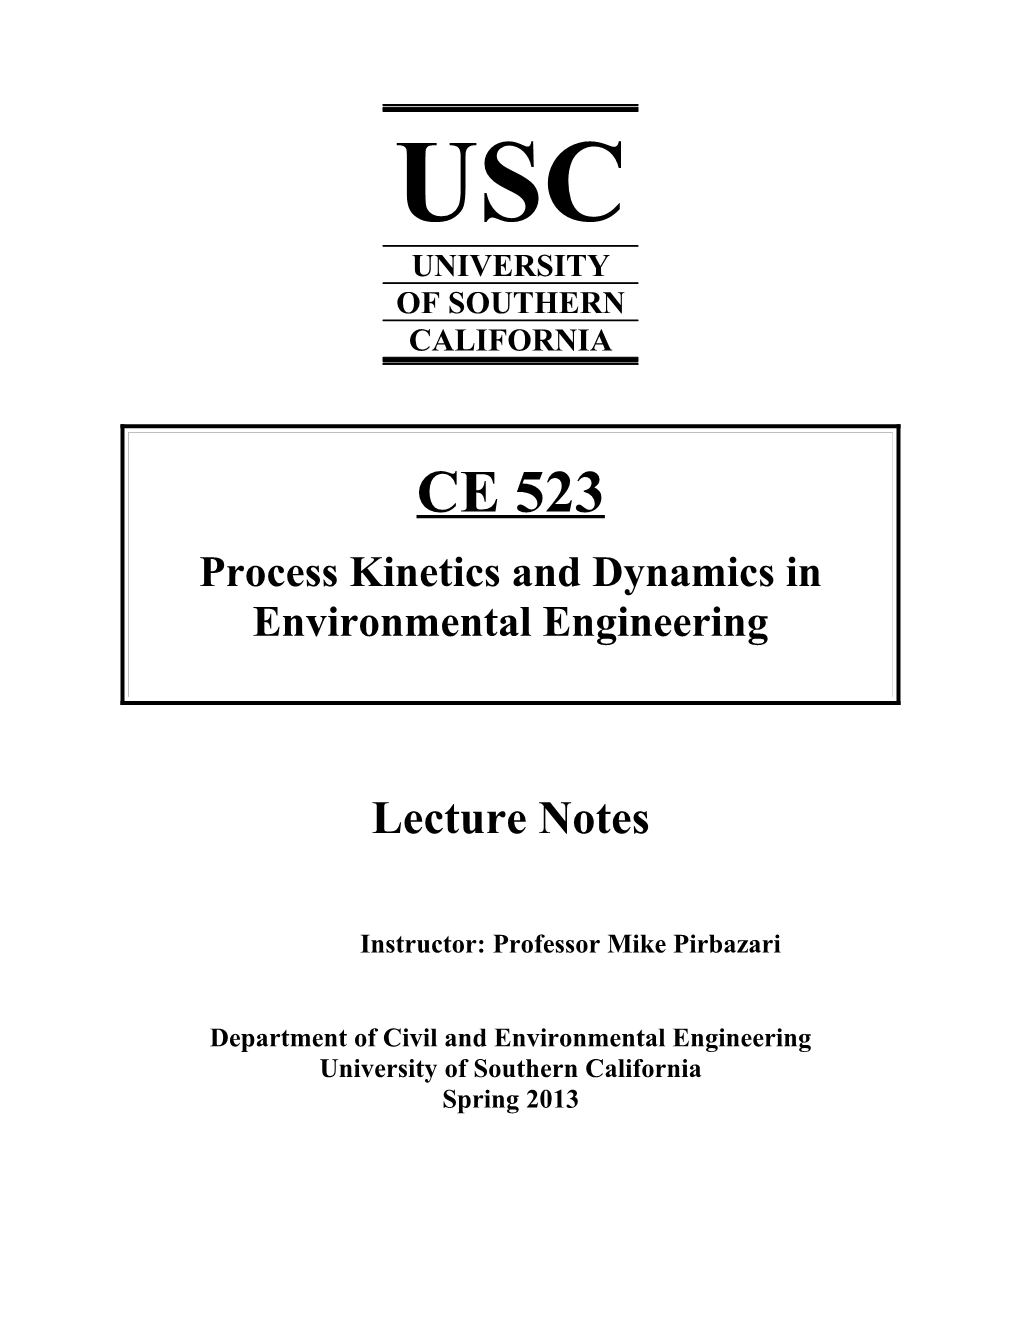 Process Kinetics and Dynamics in Environmental Engineering